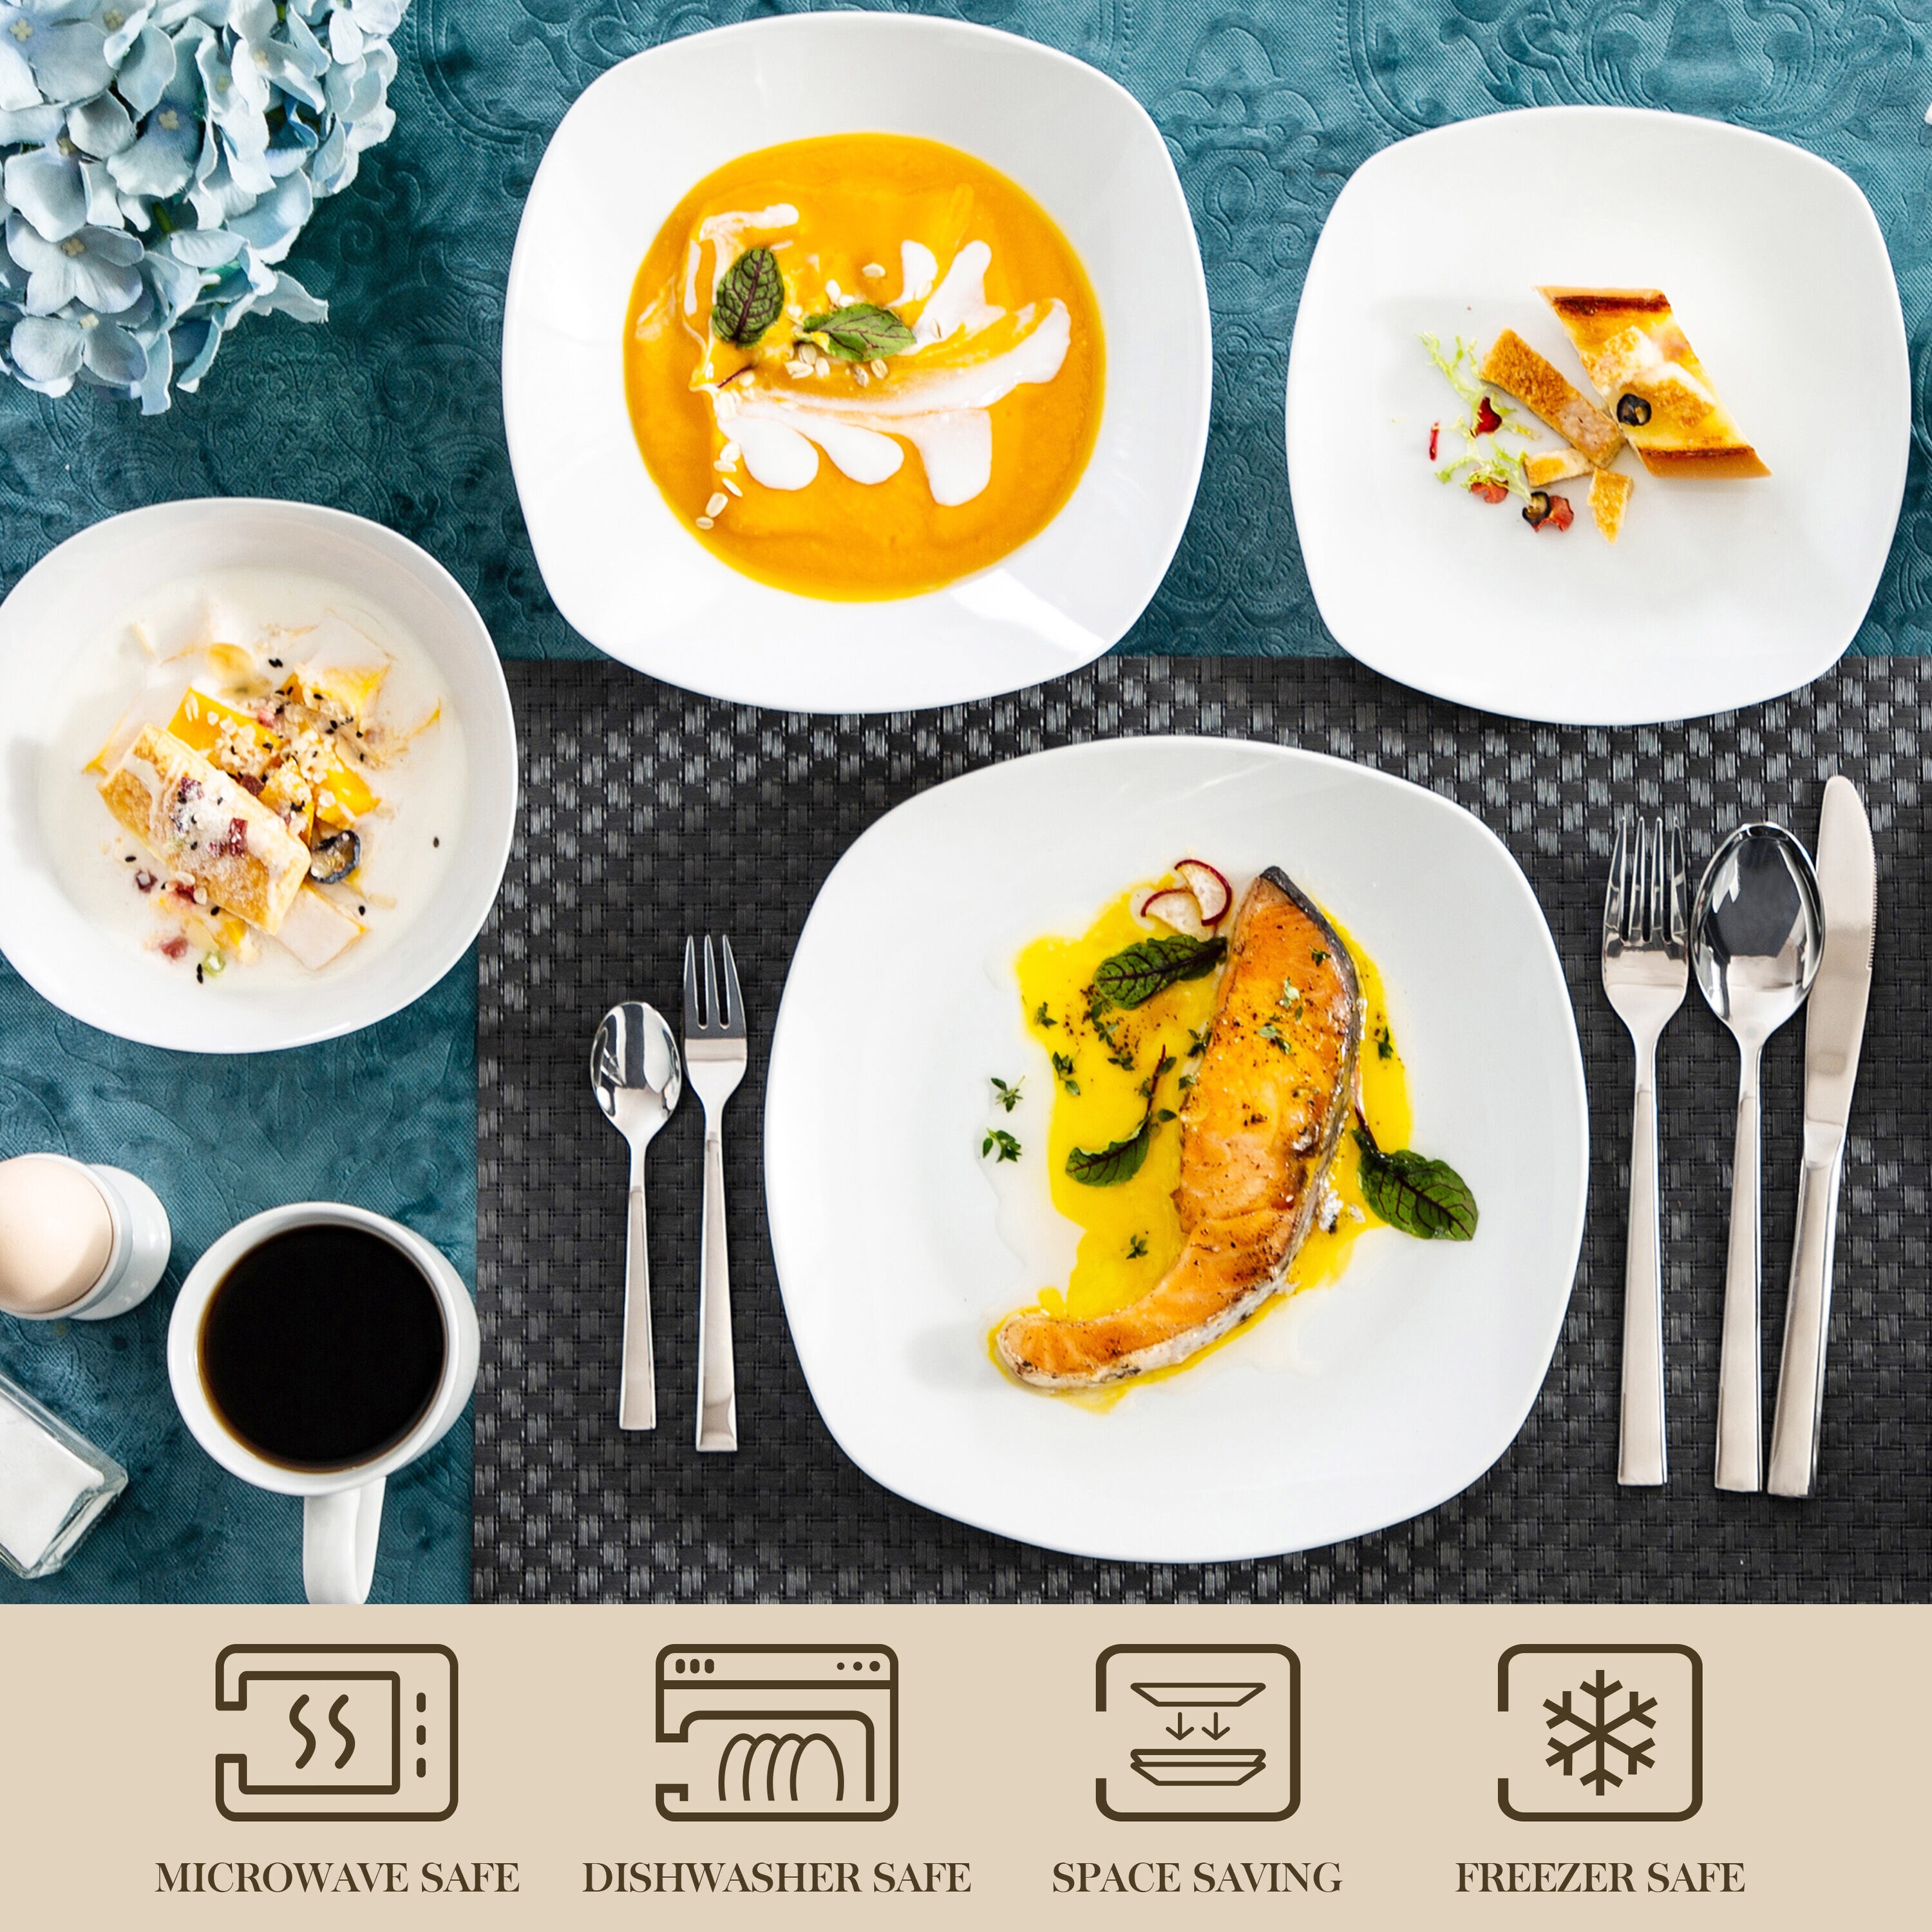 5 Creative Ways to Decorate Your Dinner Plates – MALACASA